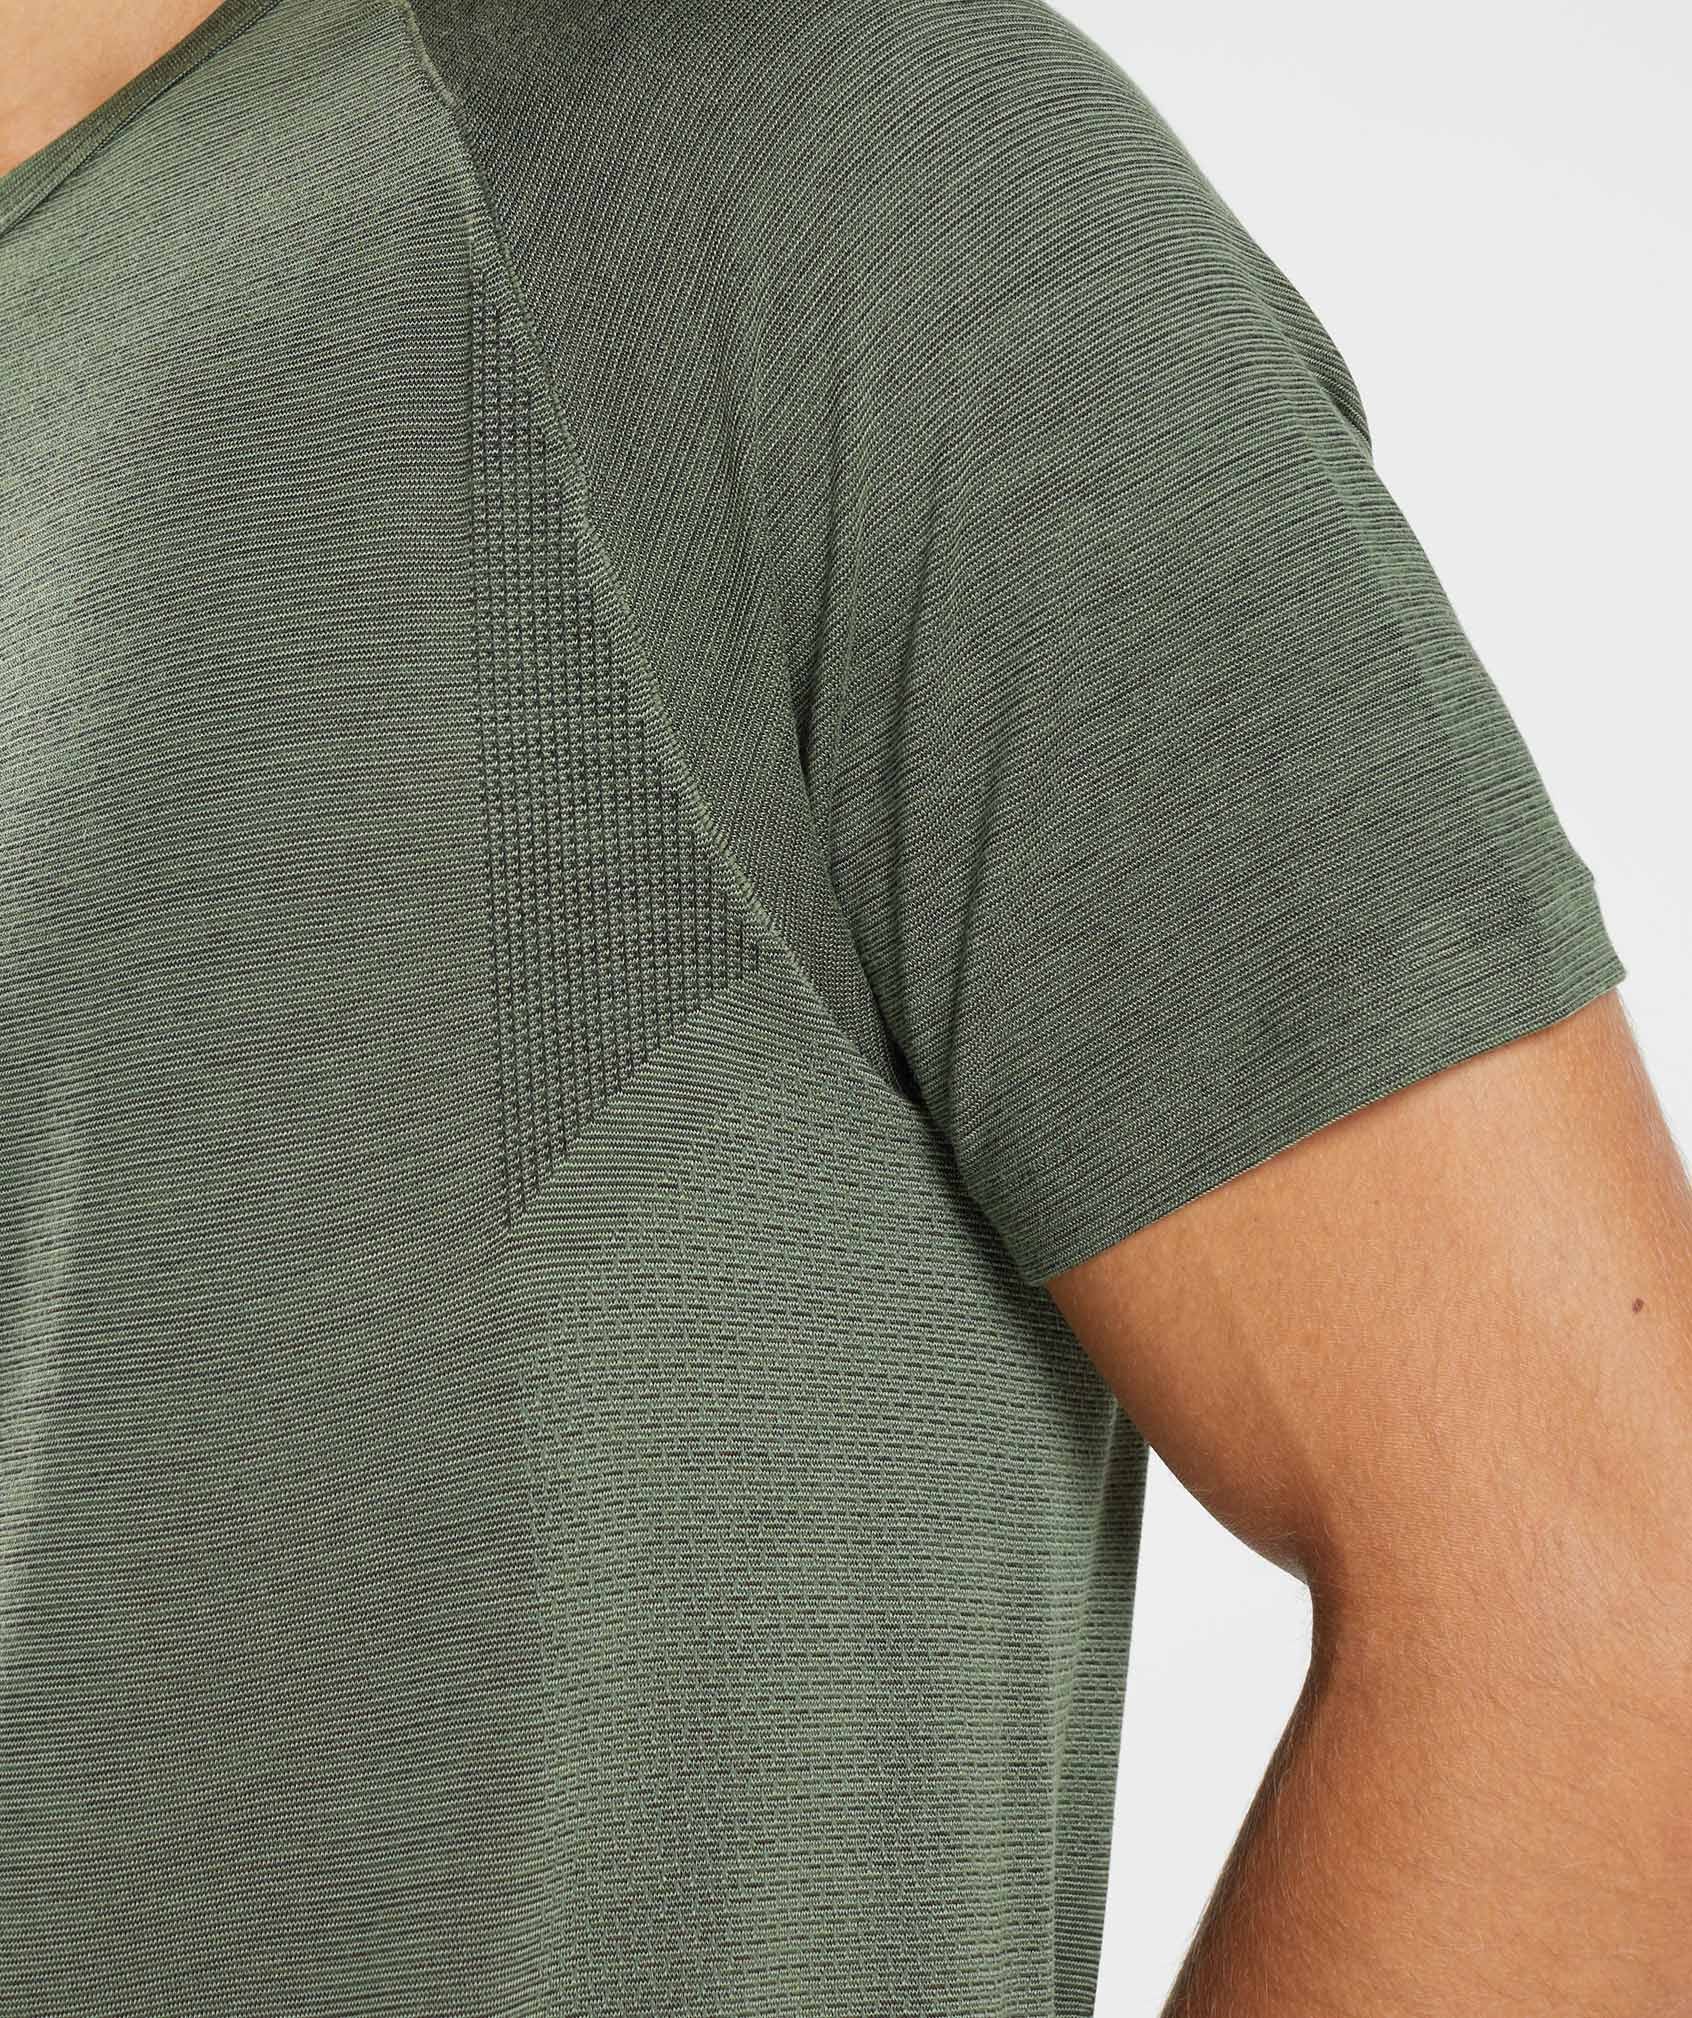 Retake Seamless T-Shirt in Core Olive/Black Marl